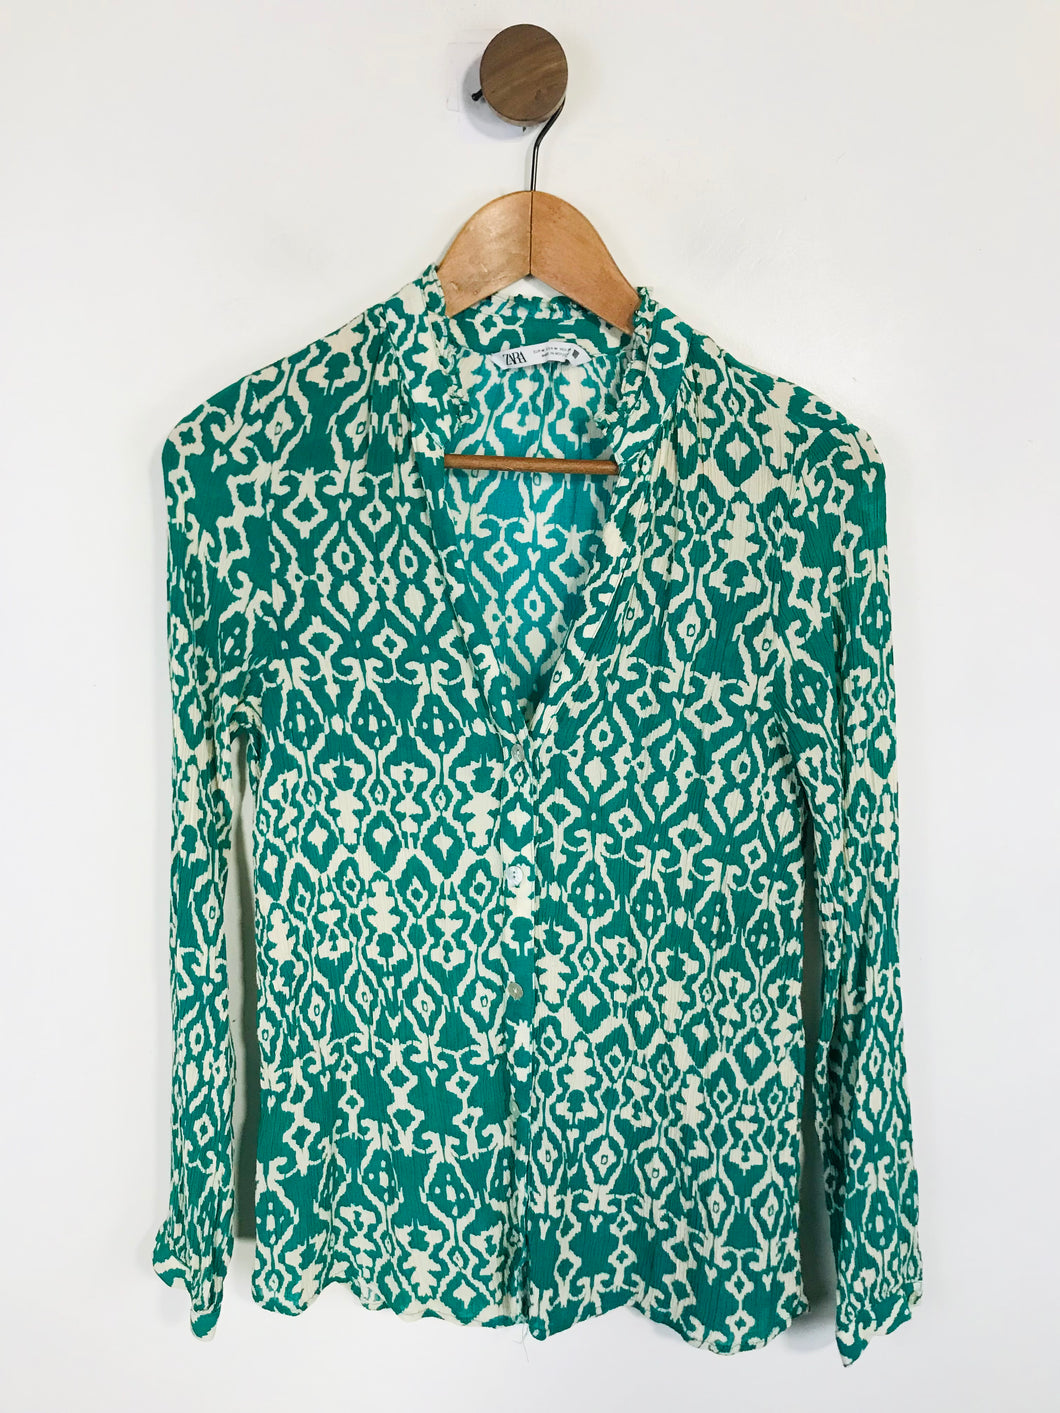 Zara Women's Boho Crinkled Button-Up Shirt | M UK10-12 | Green